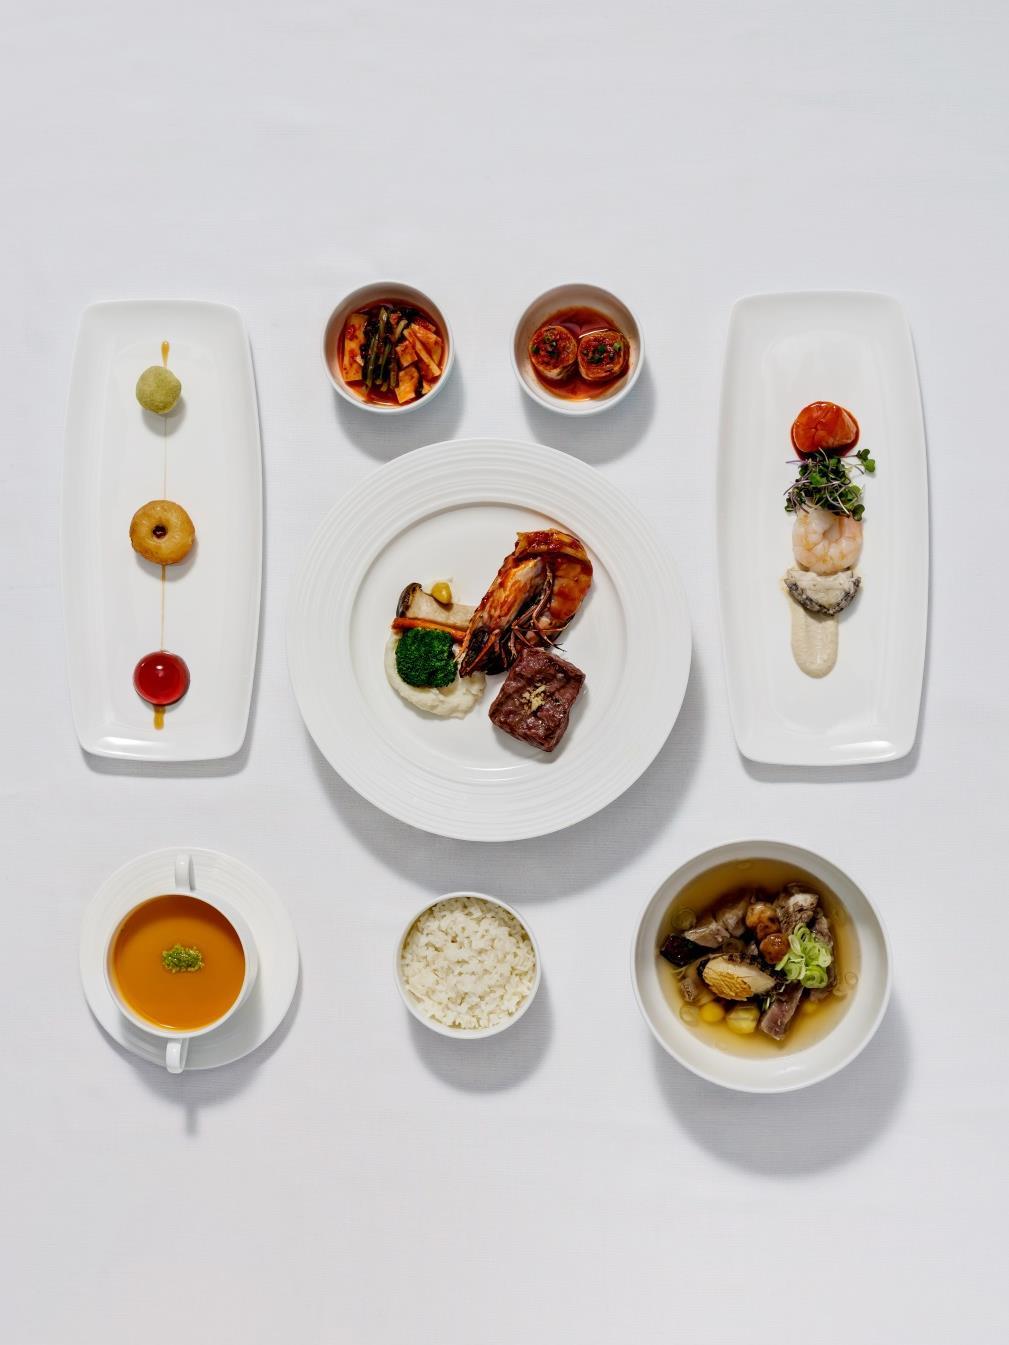 Wedding Korean Set Menu 잣소스를곁들인세가지해산물냉채 Marinated seafood with pine nut sauce 단호박영양죽 Sweet pumpkin porridge 양념왕새우구이와배즙소스로맛을낸미국산쇠고기살치살, 산더덕 Grilled king prawn with chili sauce, Grilled U.